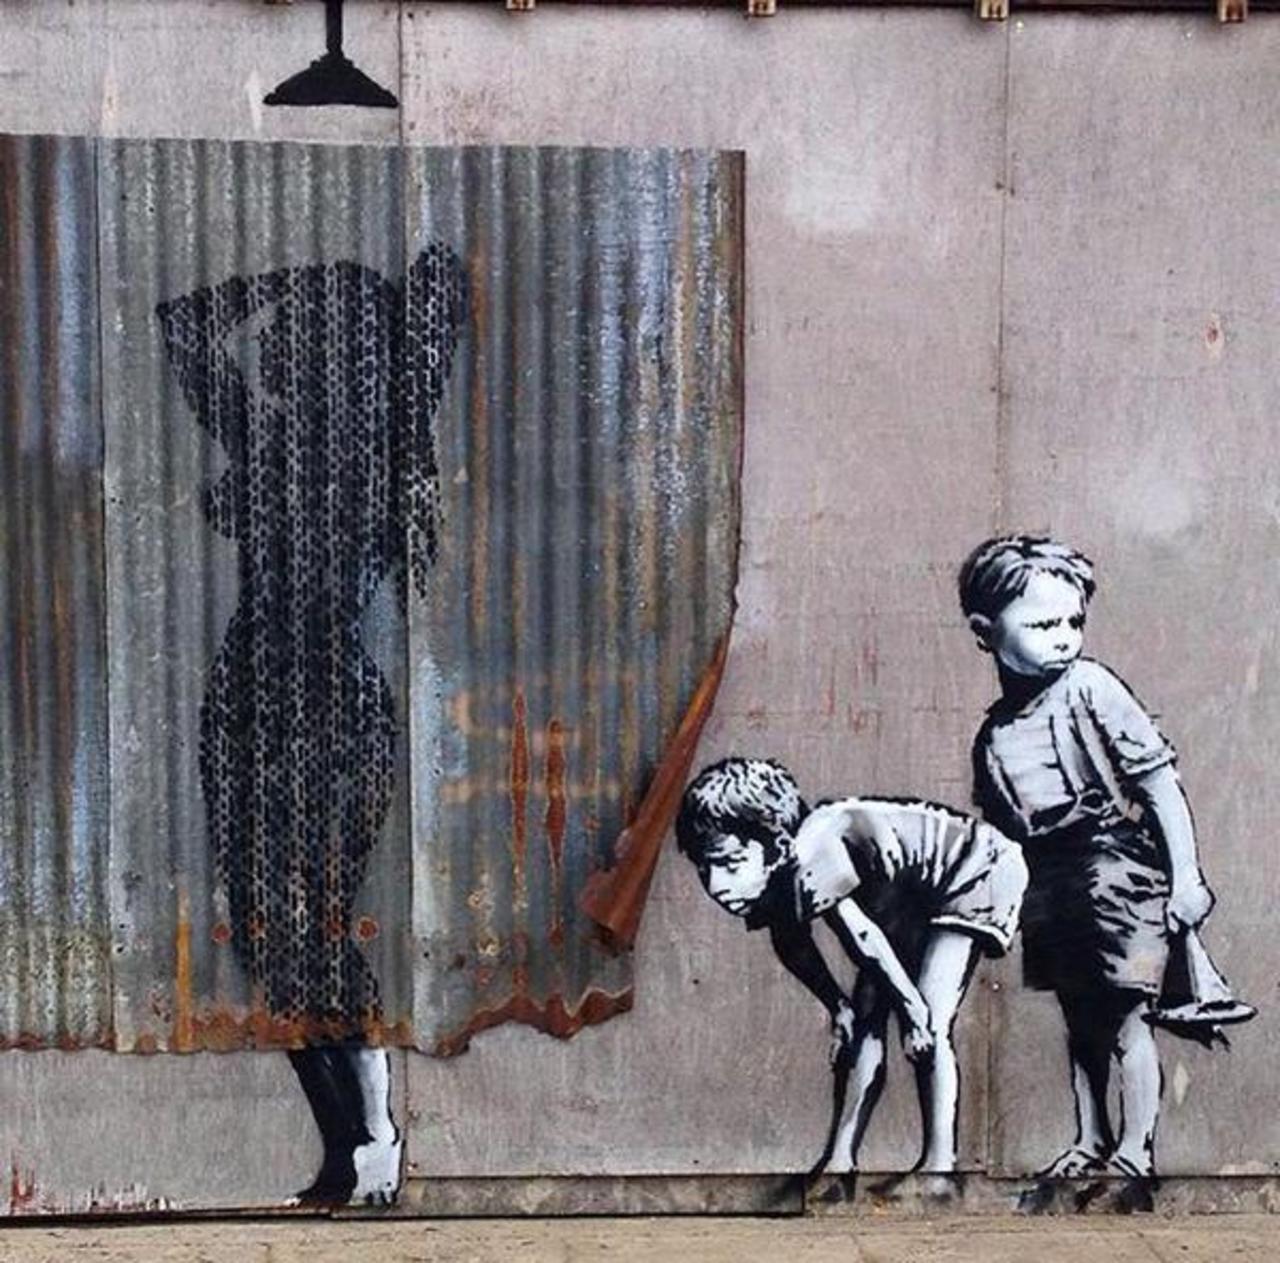 RT @PlayTheMoveVArt: New Street Art in Dismaland by Banksy
#streetart #banksy #art #graffiti #FreedomOfArt http://goo.gl/Kqrq6S http://t.co/TXGsJub7NL